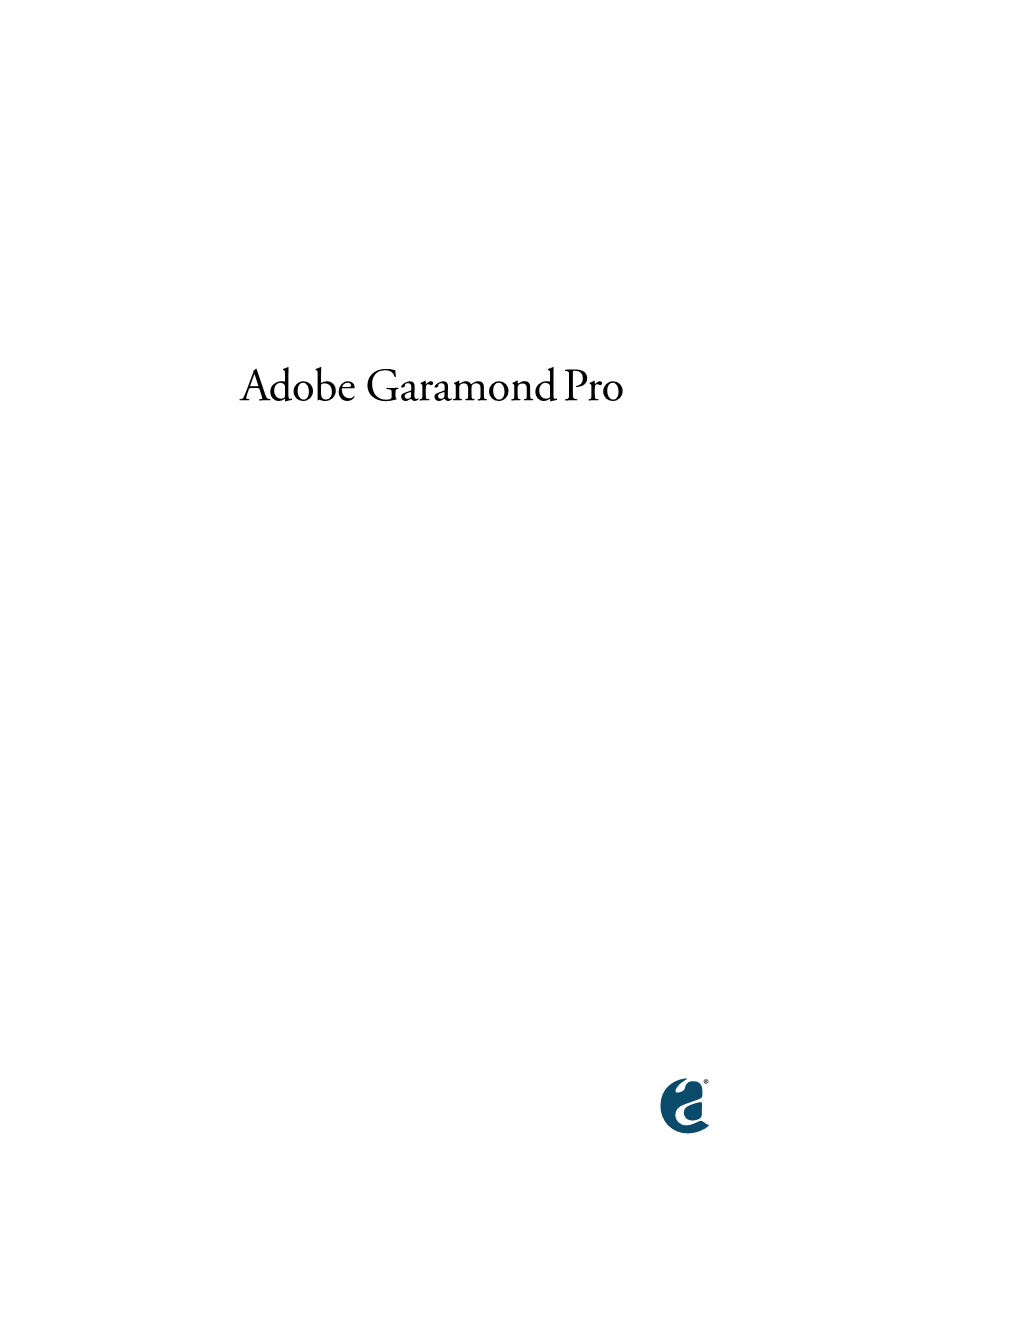 Adobe Garamond Pro